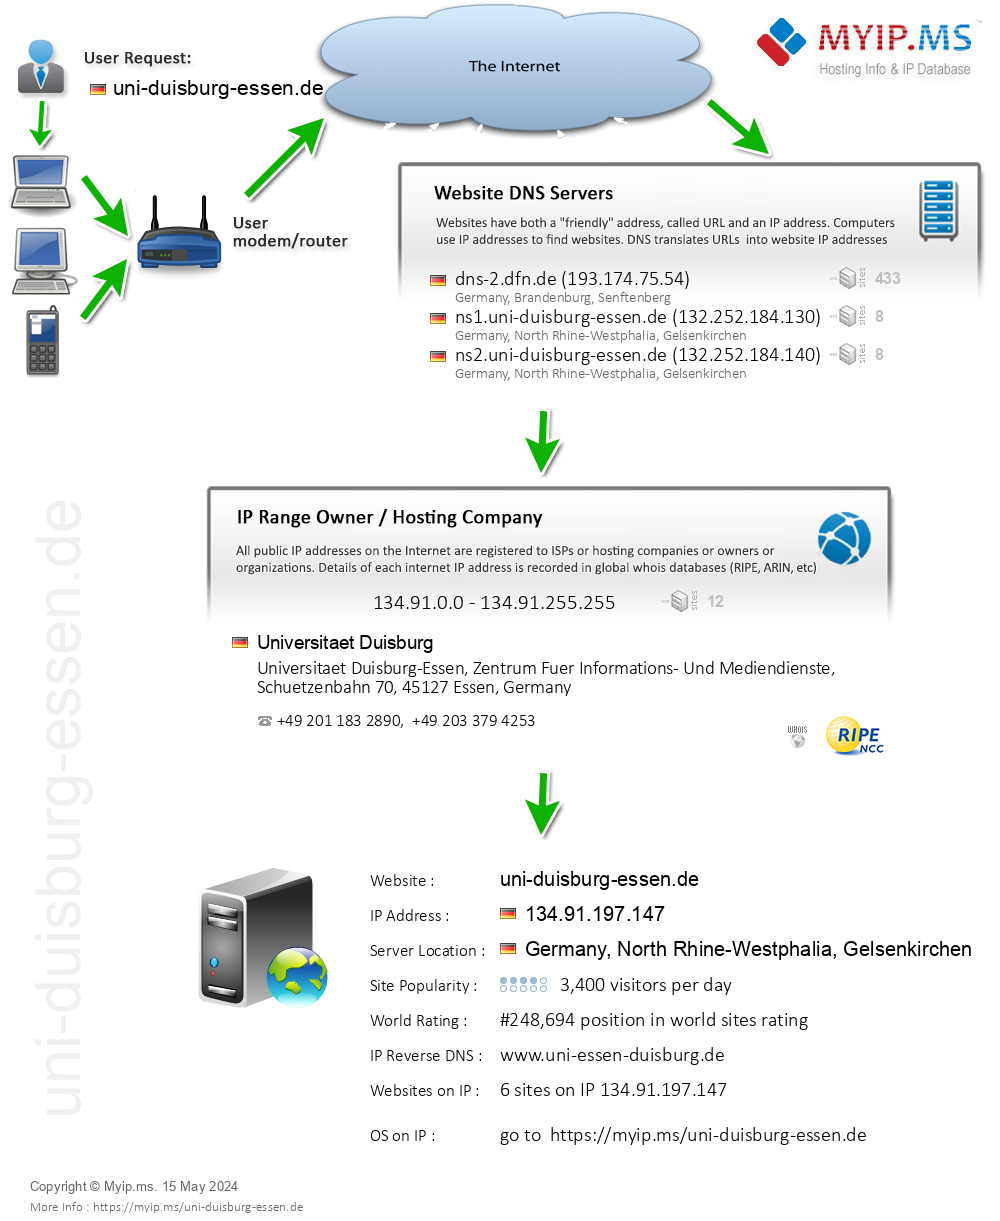 Uni-duisburg-essen.de - Website Hosting Visual IP Diagram